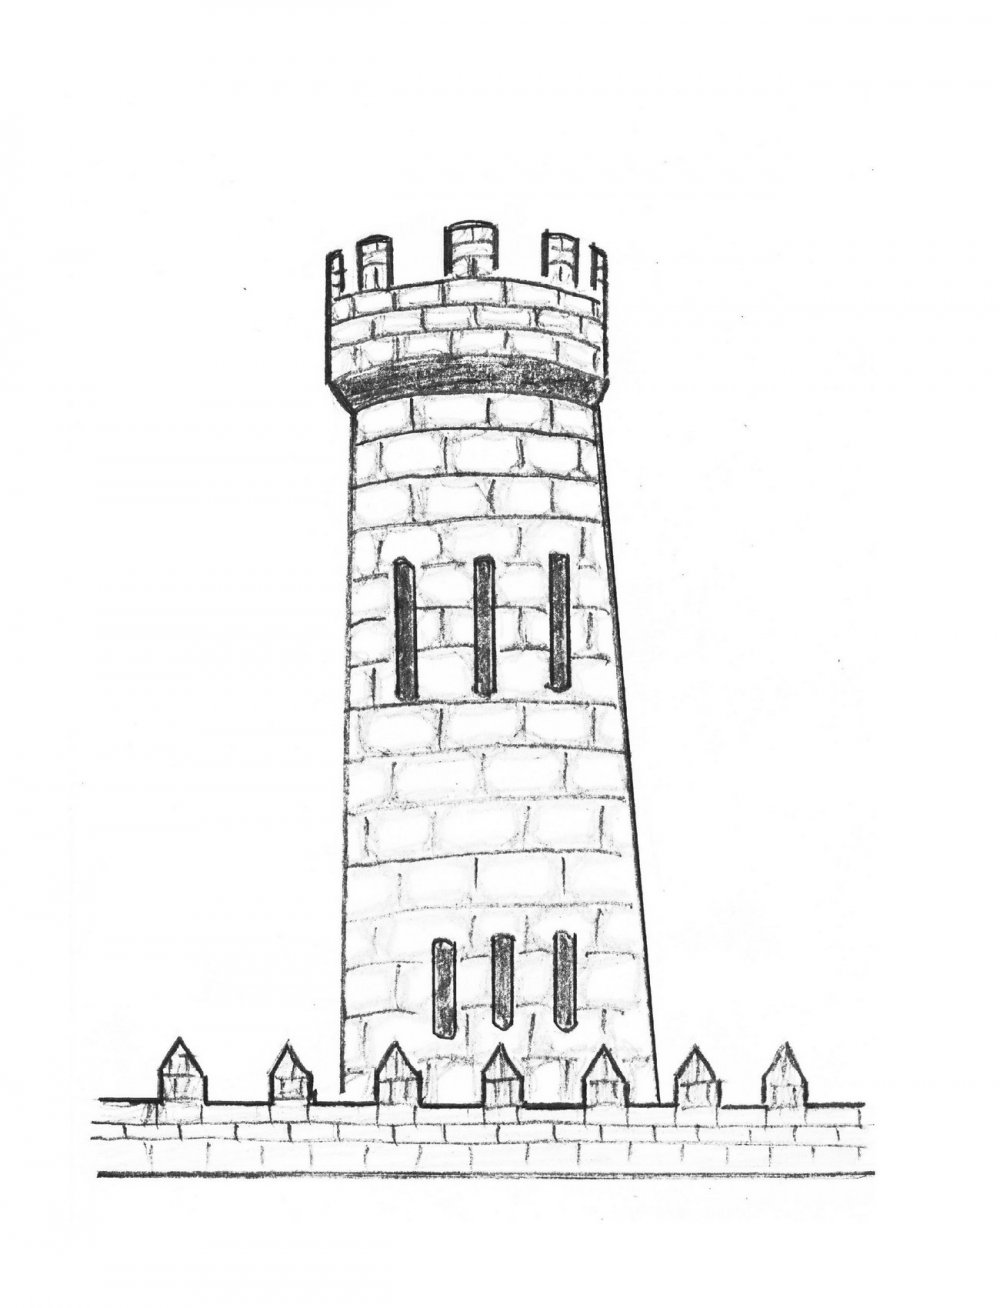 Башня рисунок